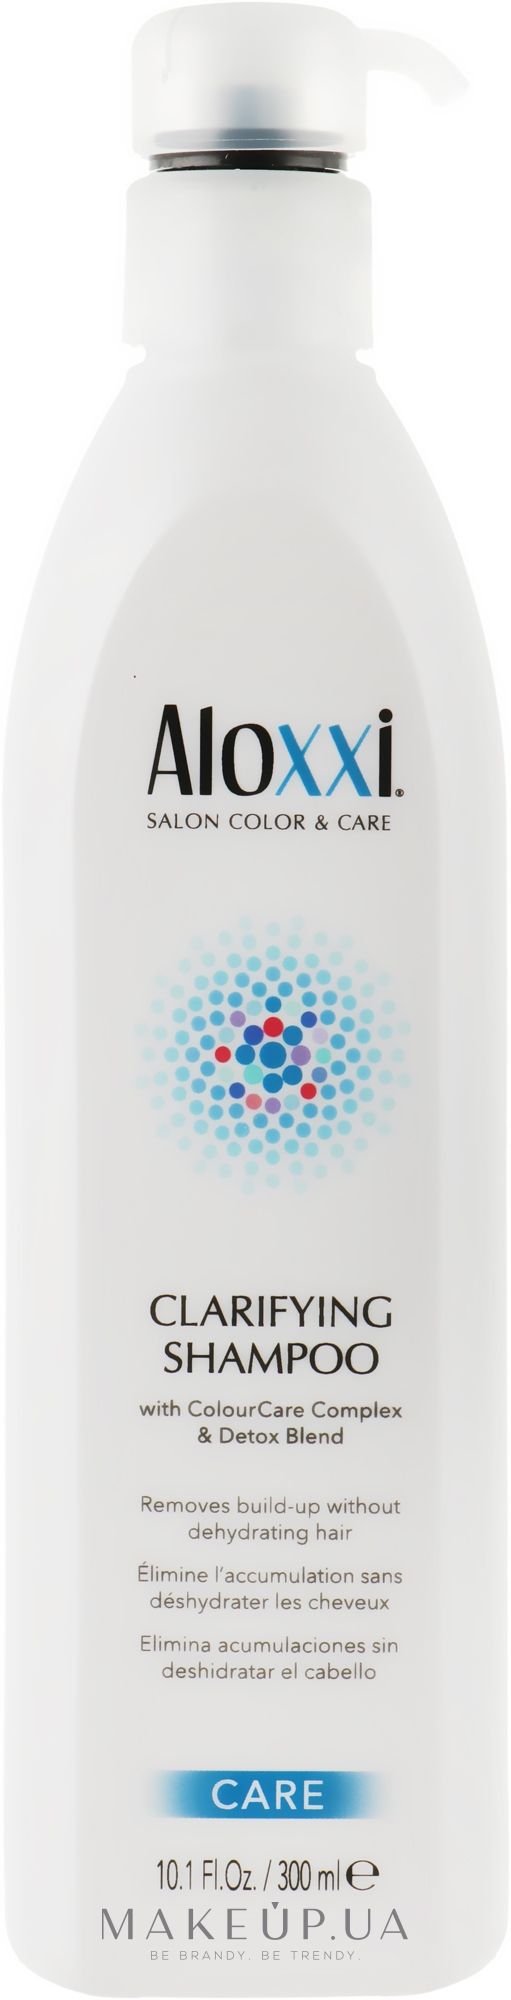 Очищающий детокс-шампунь для волос - Aloxxi Clarifying Shampoo — фото 300ml